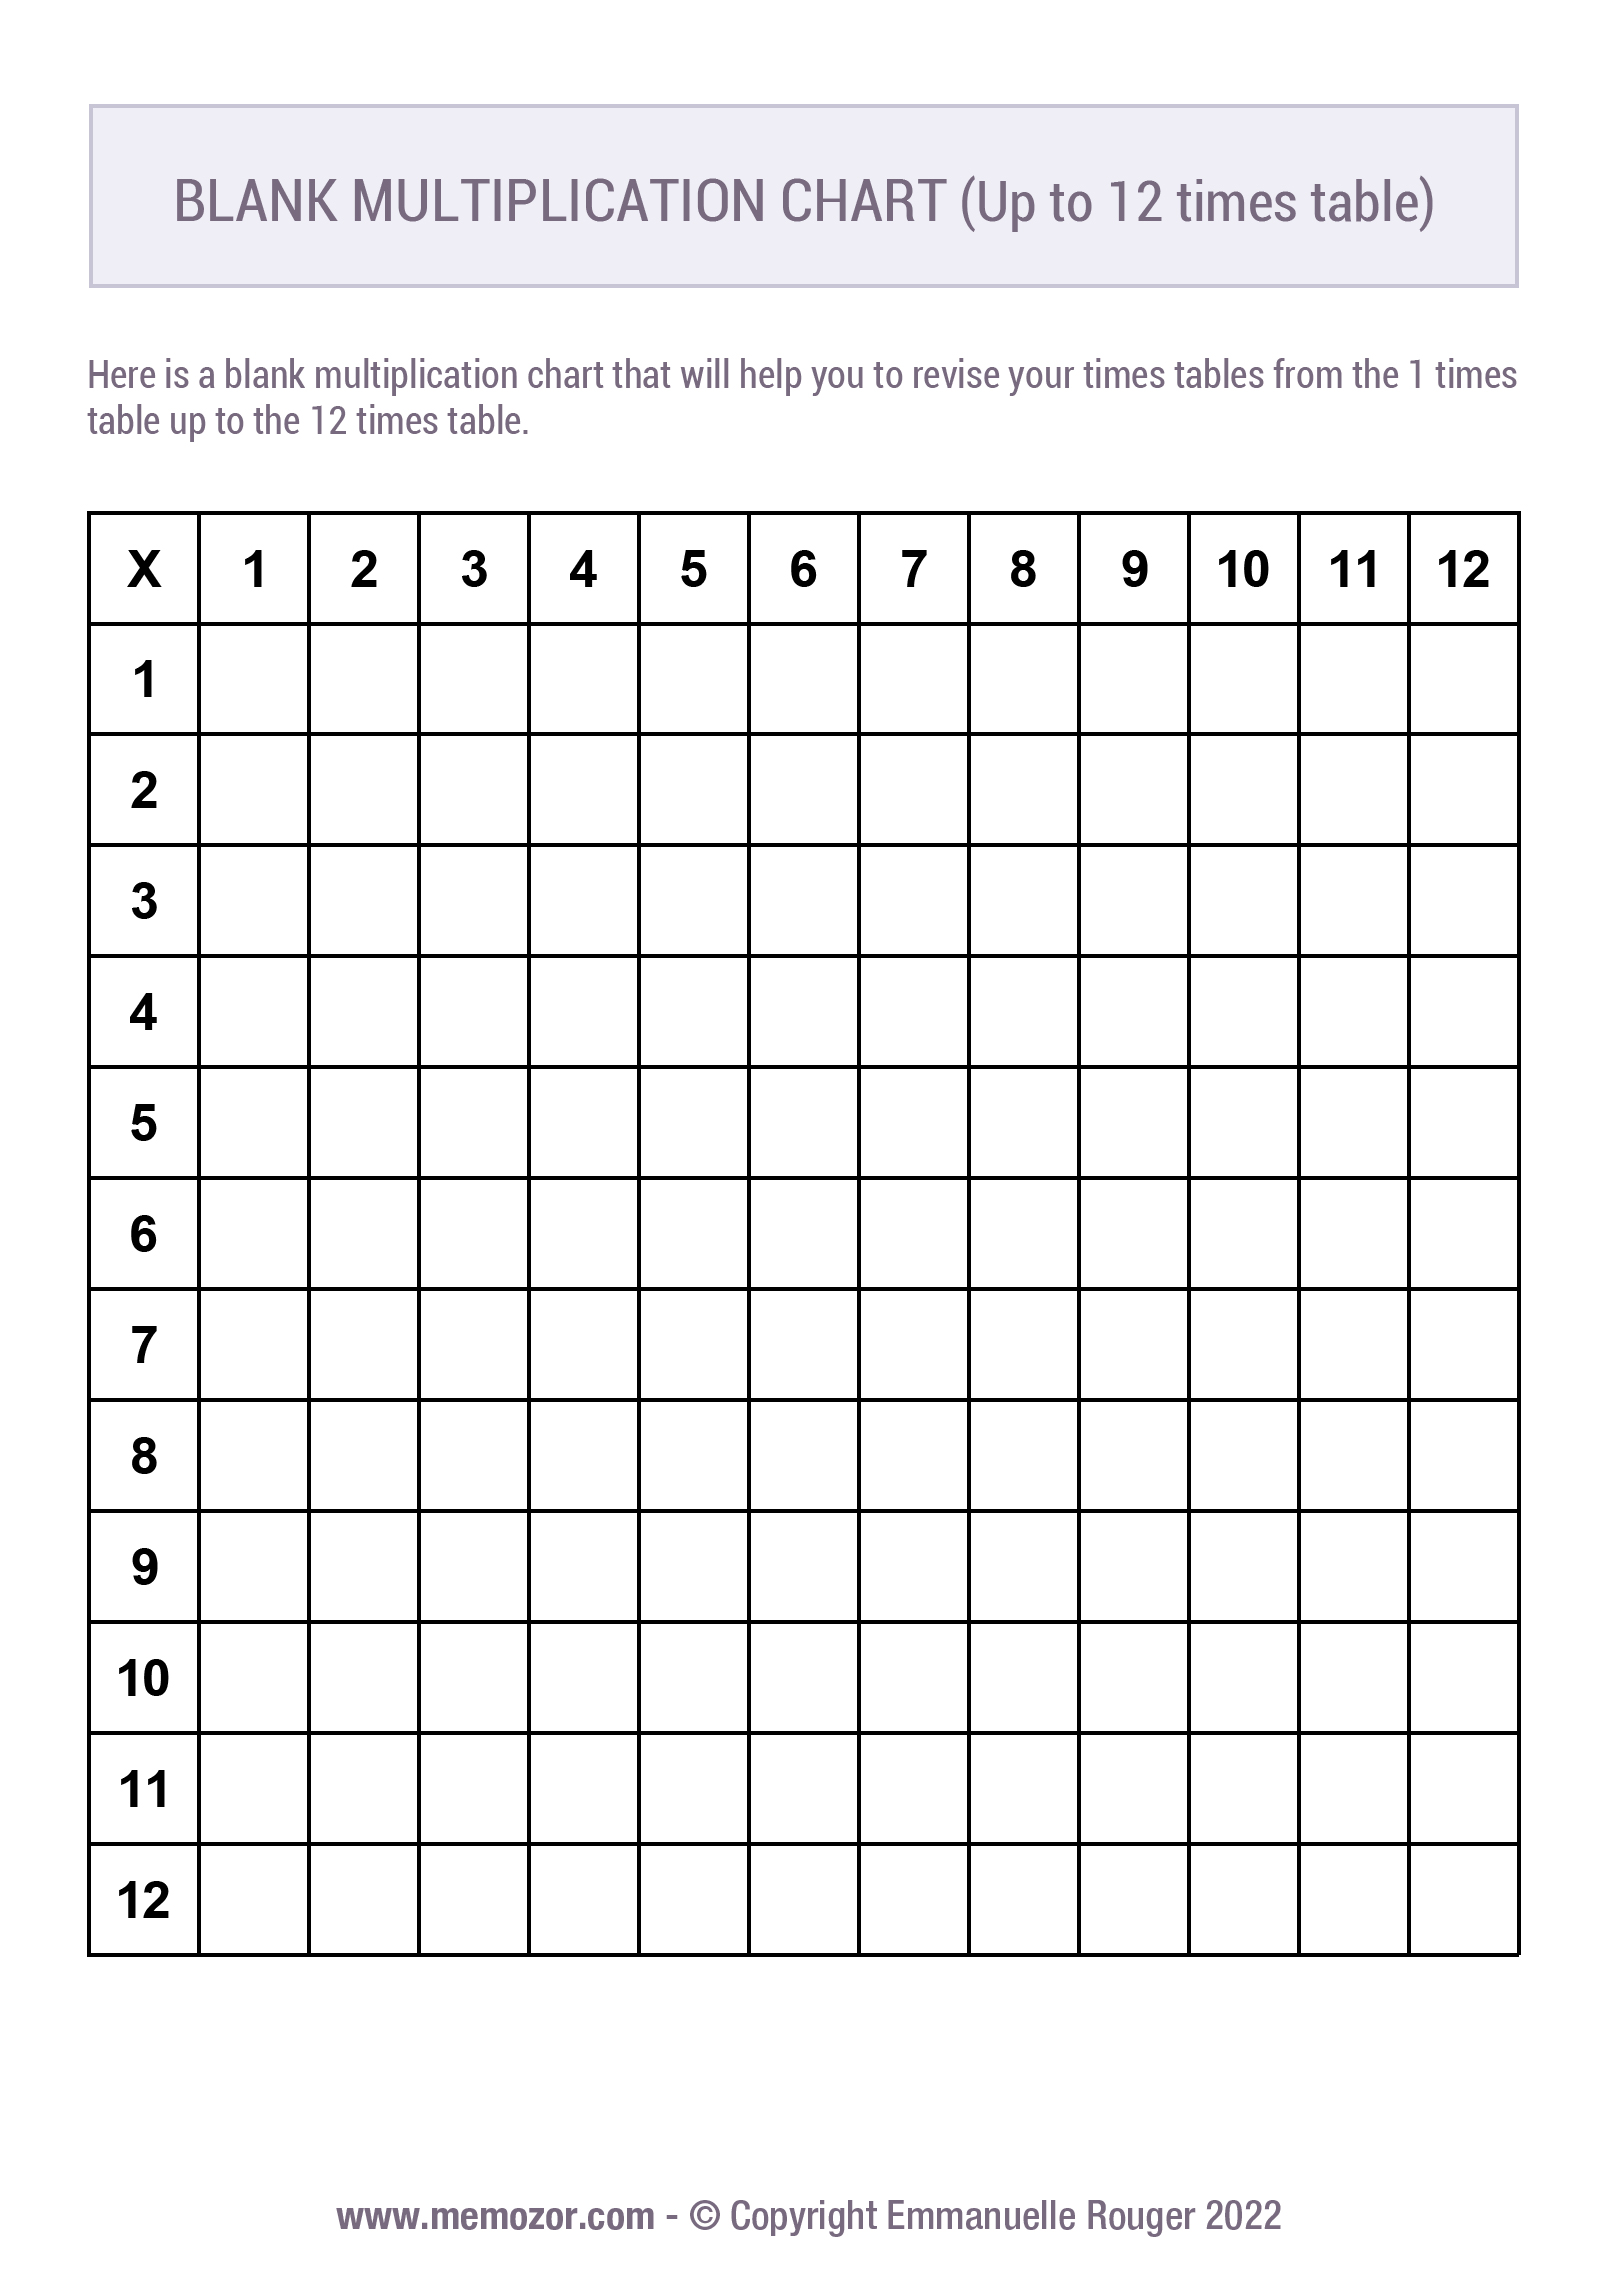 printable-blank-multiplication-chart-black-white-1-12-free-memozor